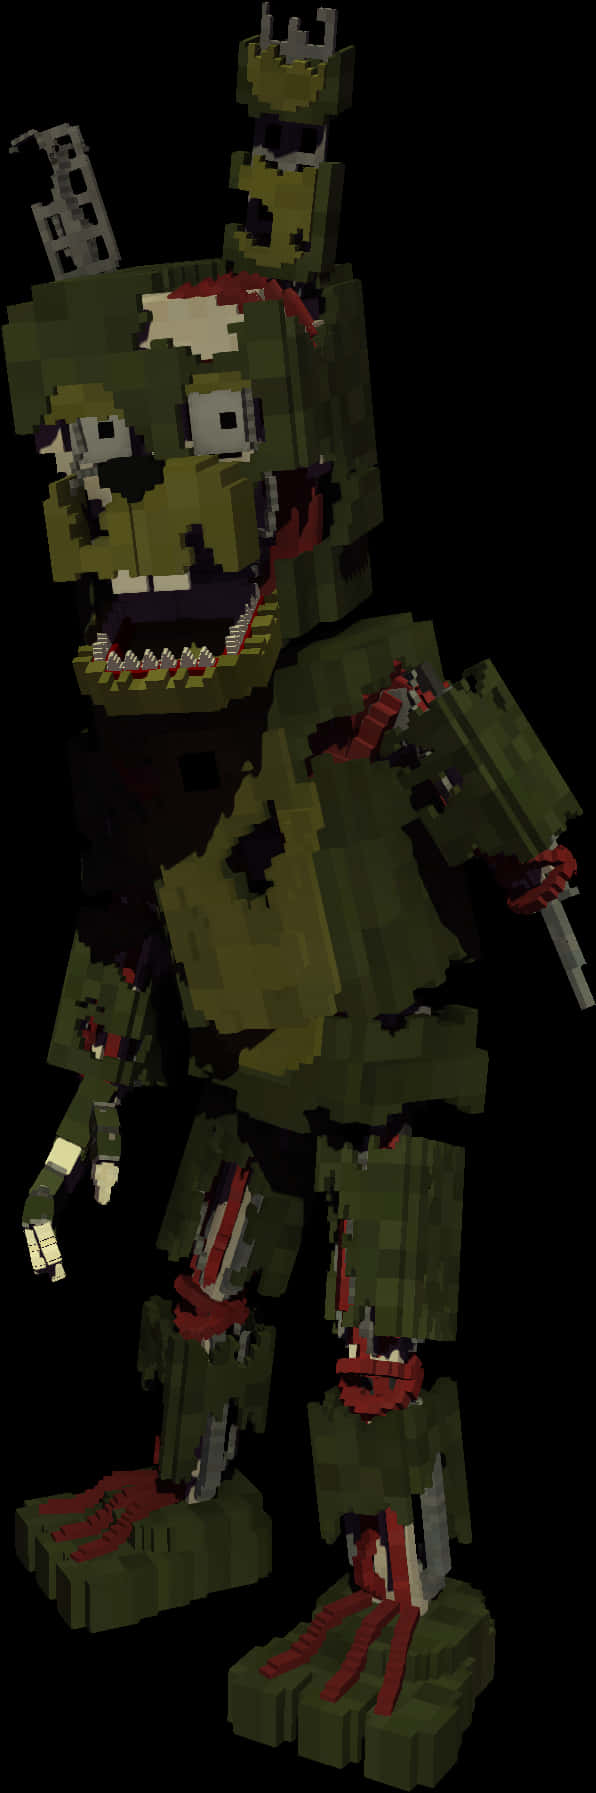 A Green Monster With Sharp Teeth And Sharp Teeth